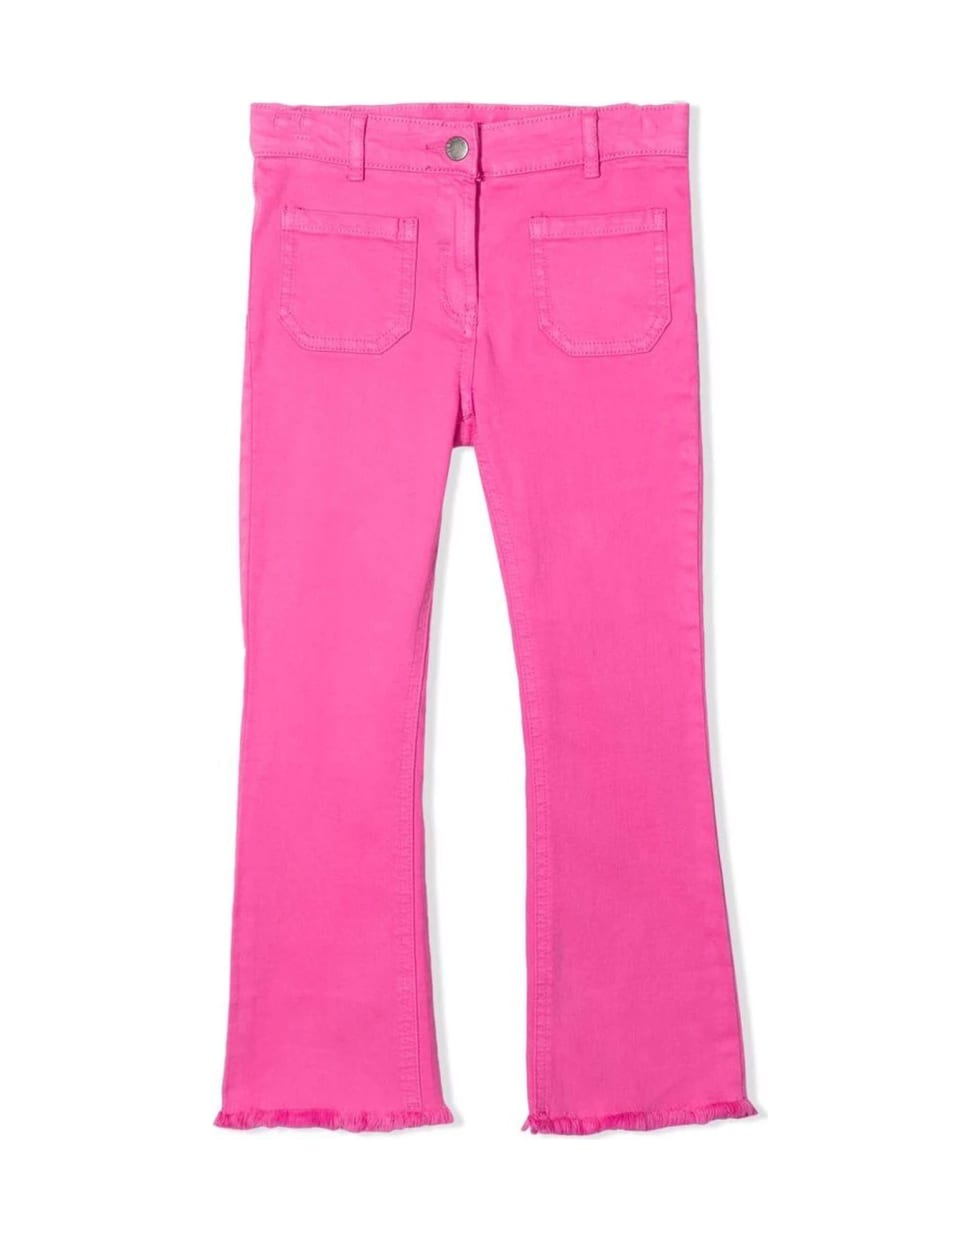 Stella McCartney Hot Pink Organic Cotton Blend Jeans - Rosa